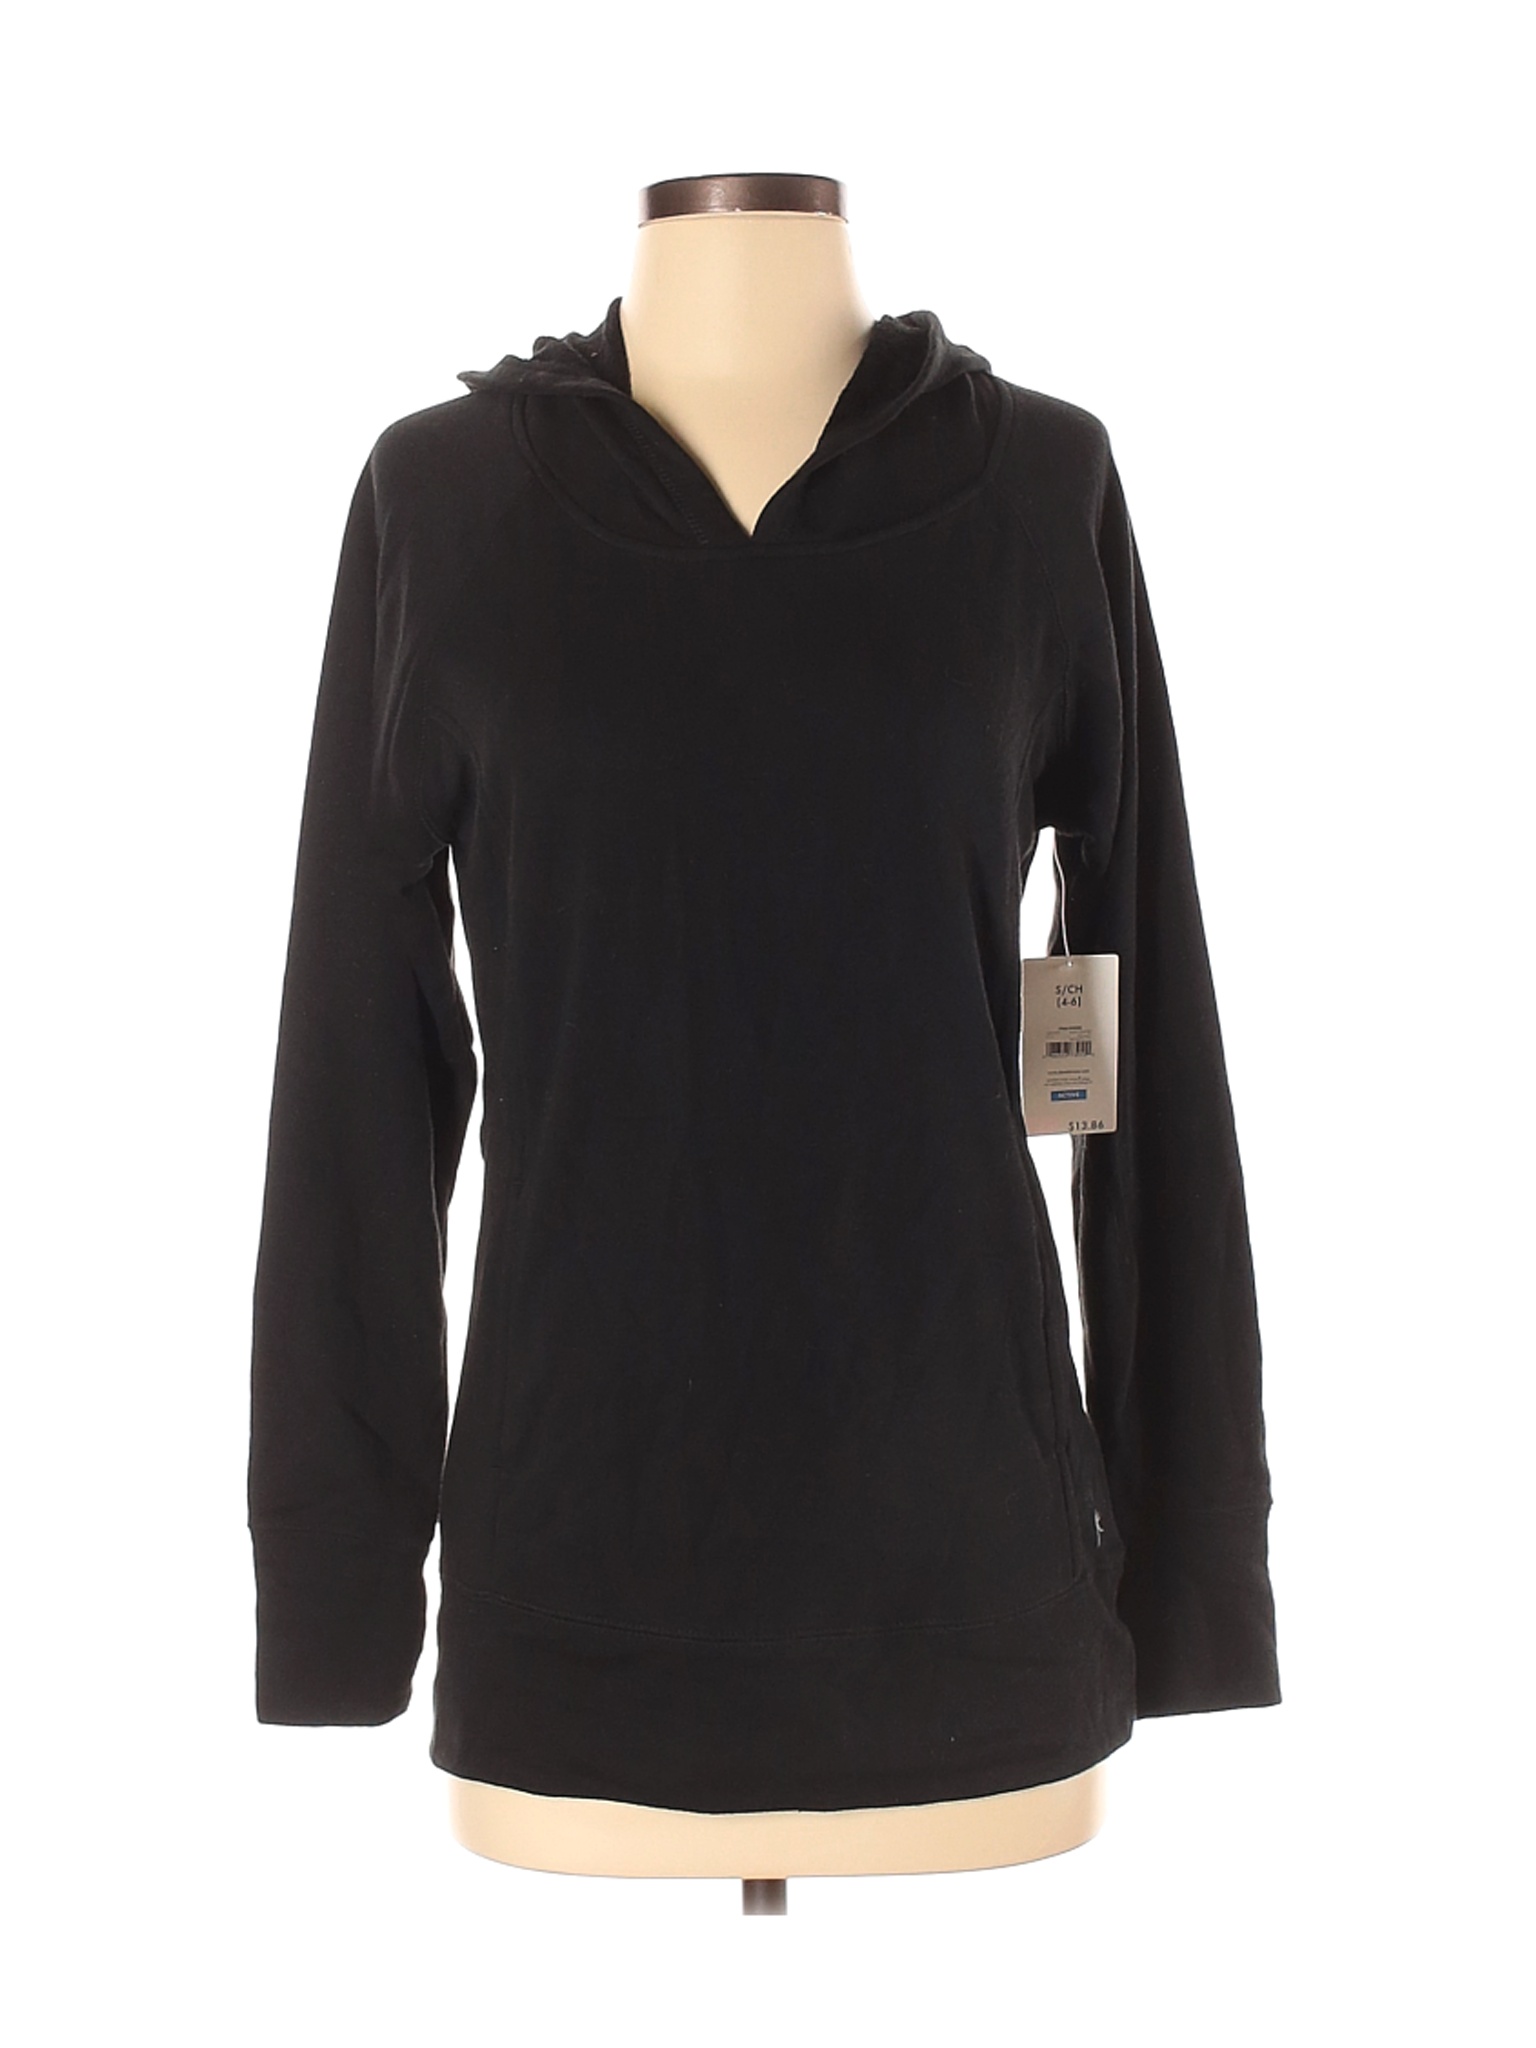 NWT Danskin Now Women Black Pullover Hoodie S | eBay